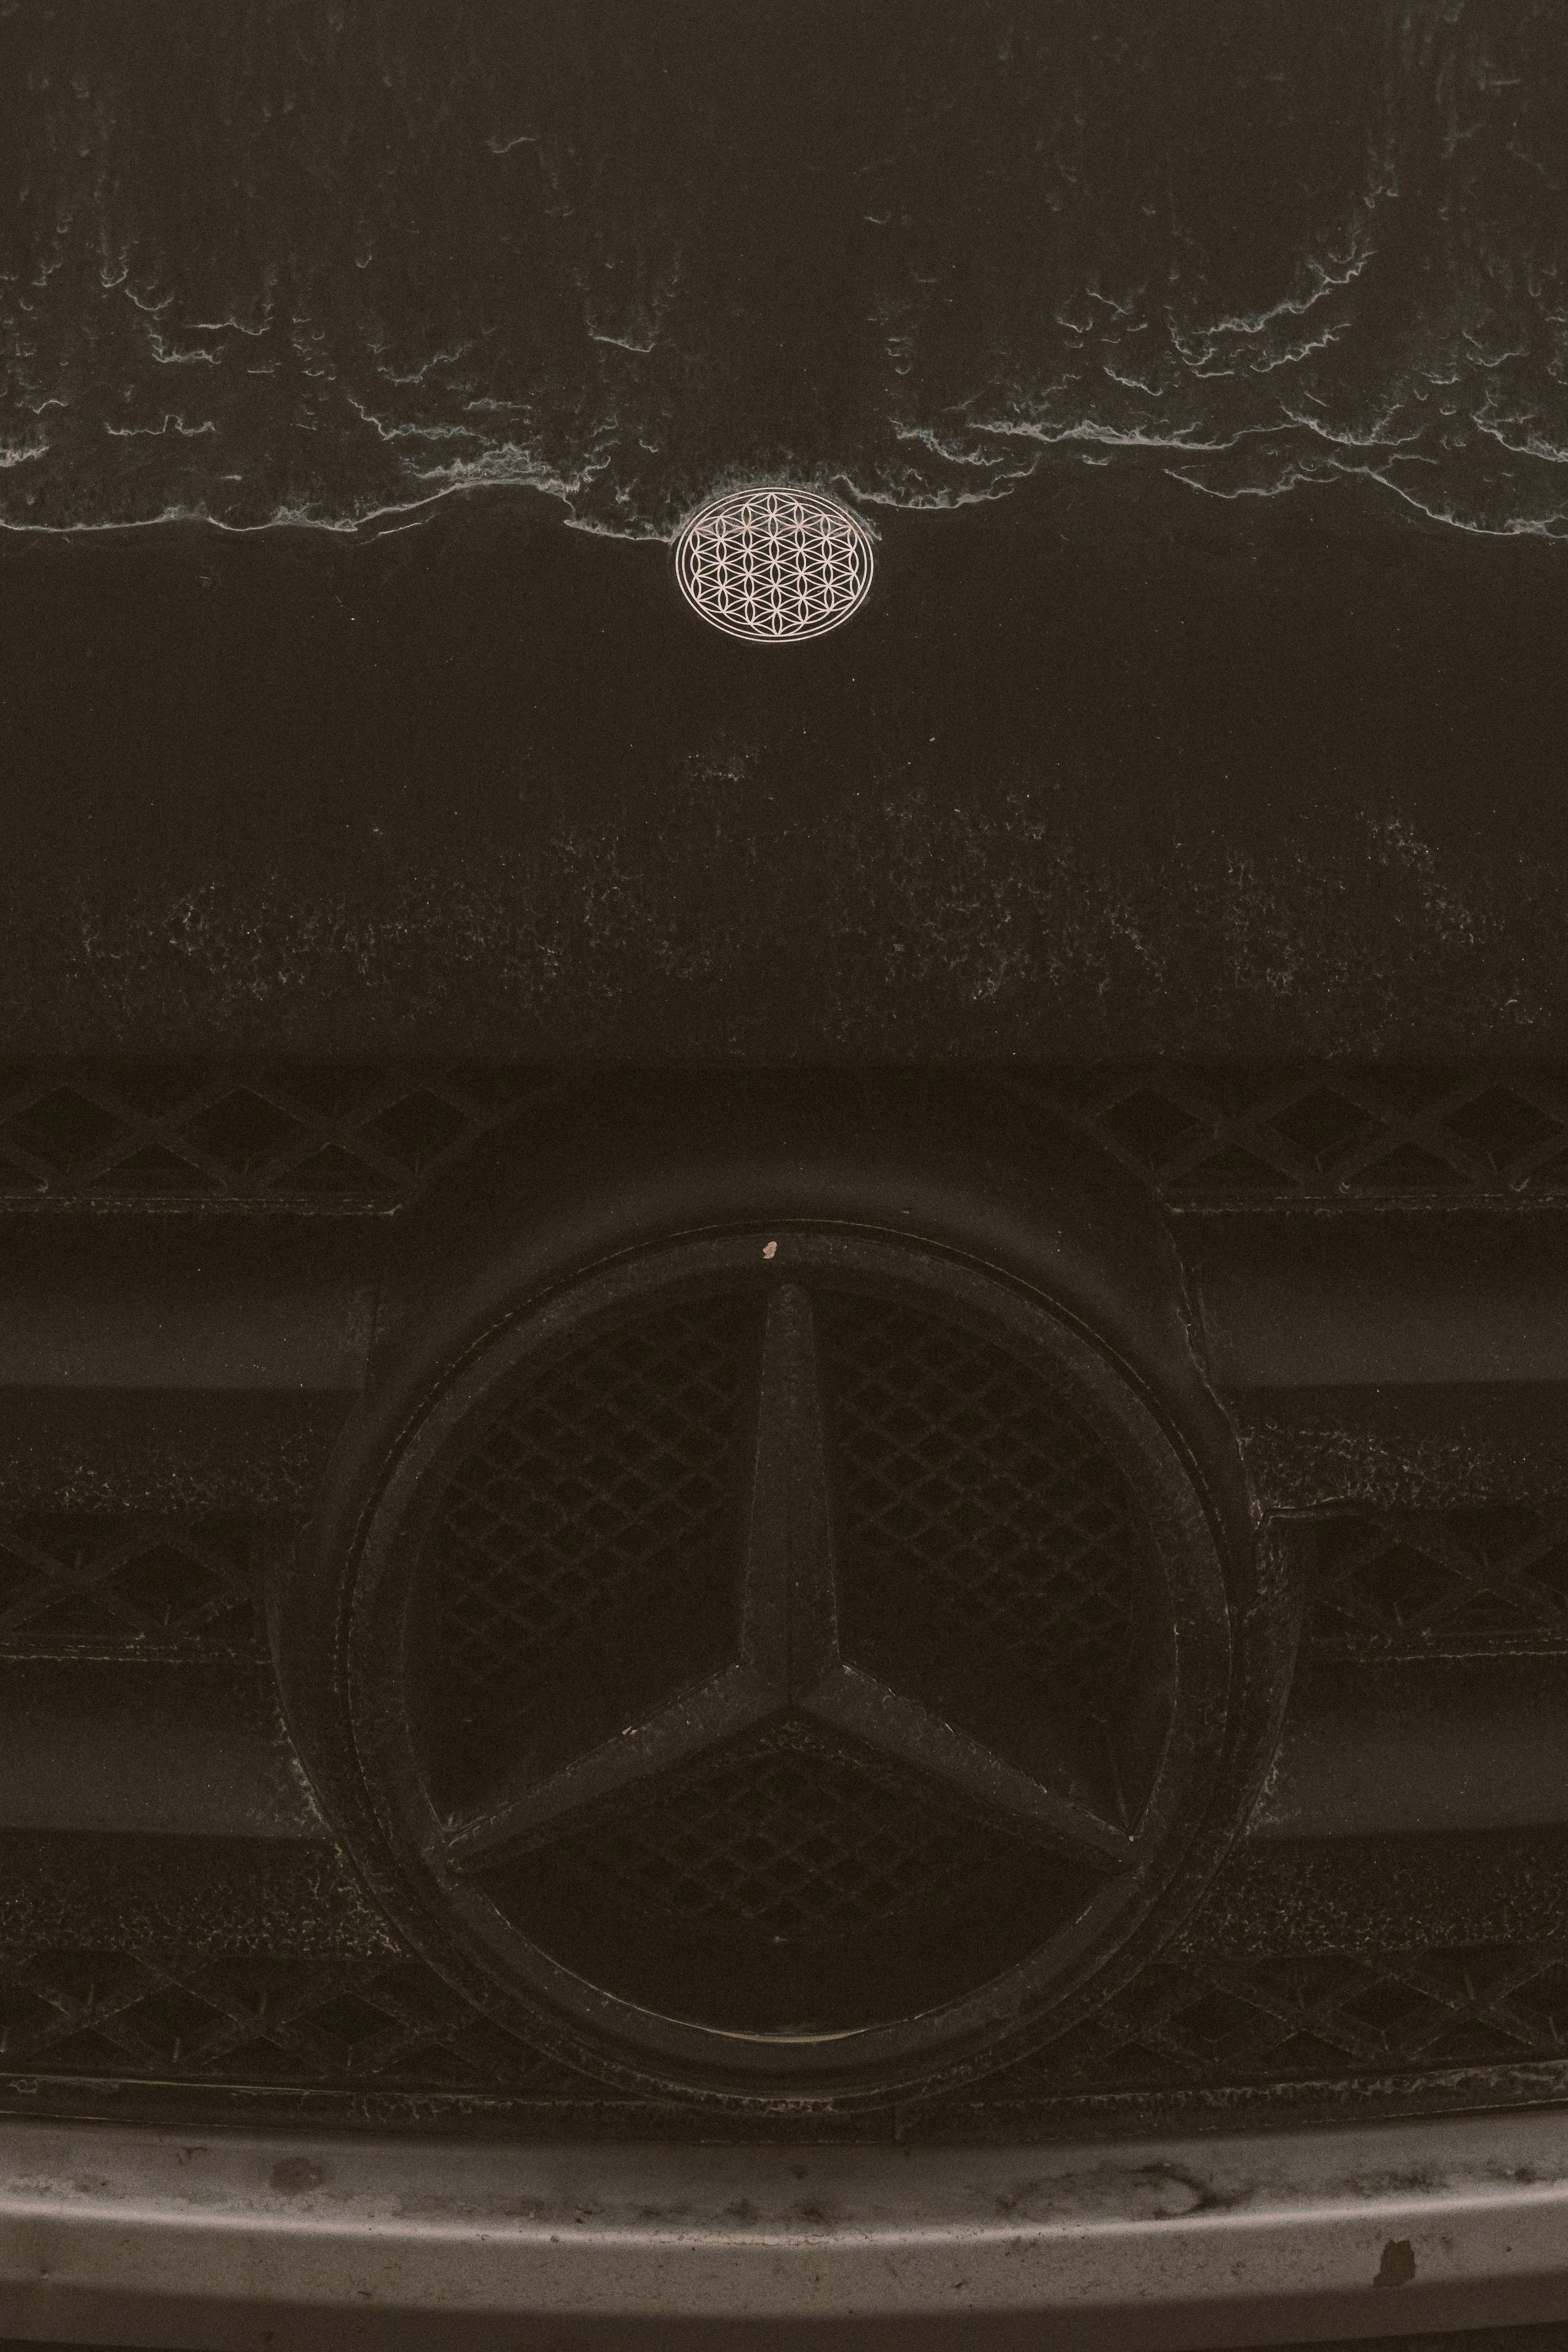 Mercedes-Benz Việt Nam